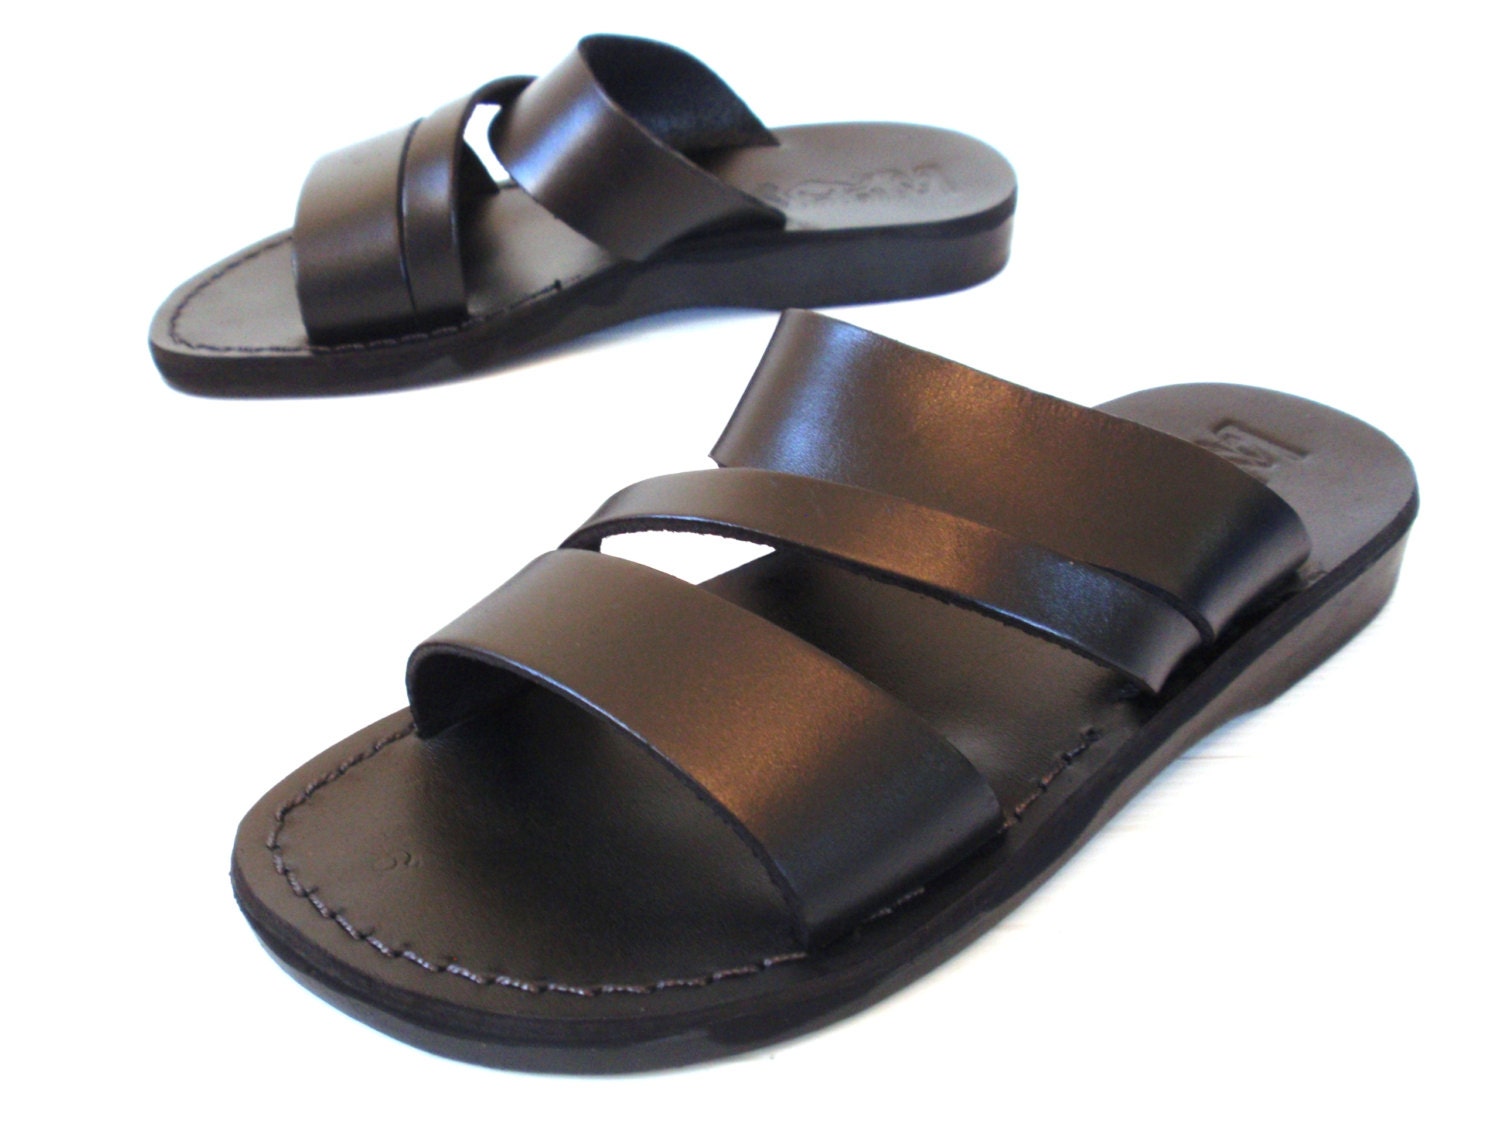 SALE New Leather Sandals GREEK Men's Shoes Thongs by Sandalimshop